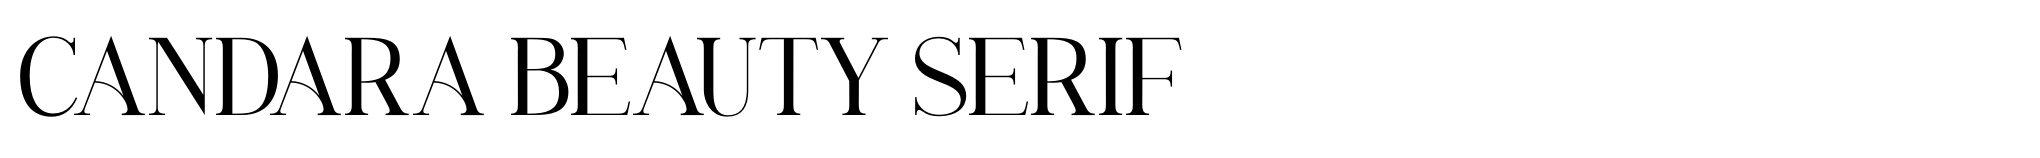 Candara Beauty Serif image